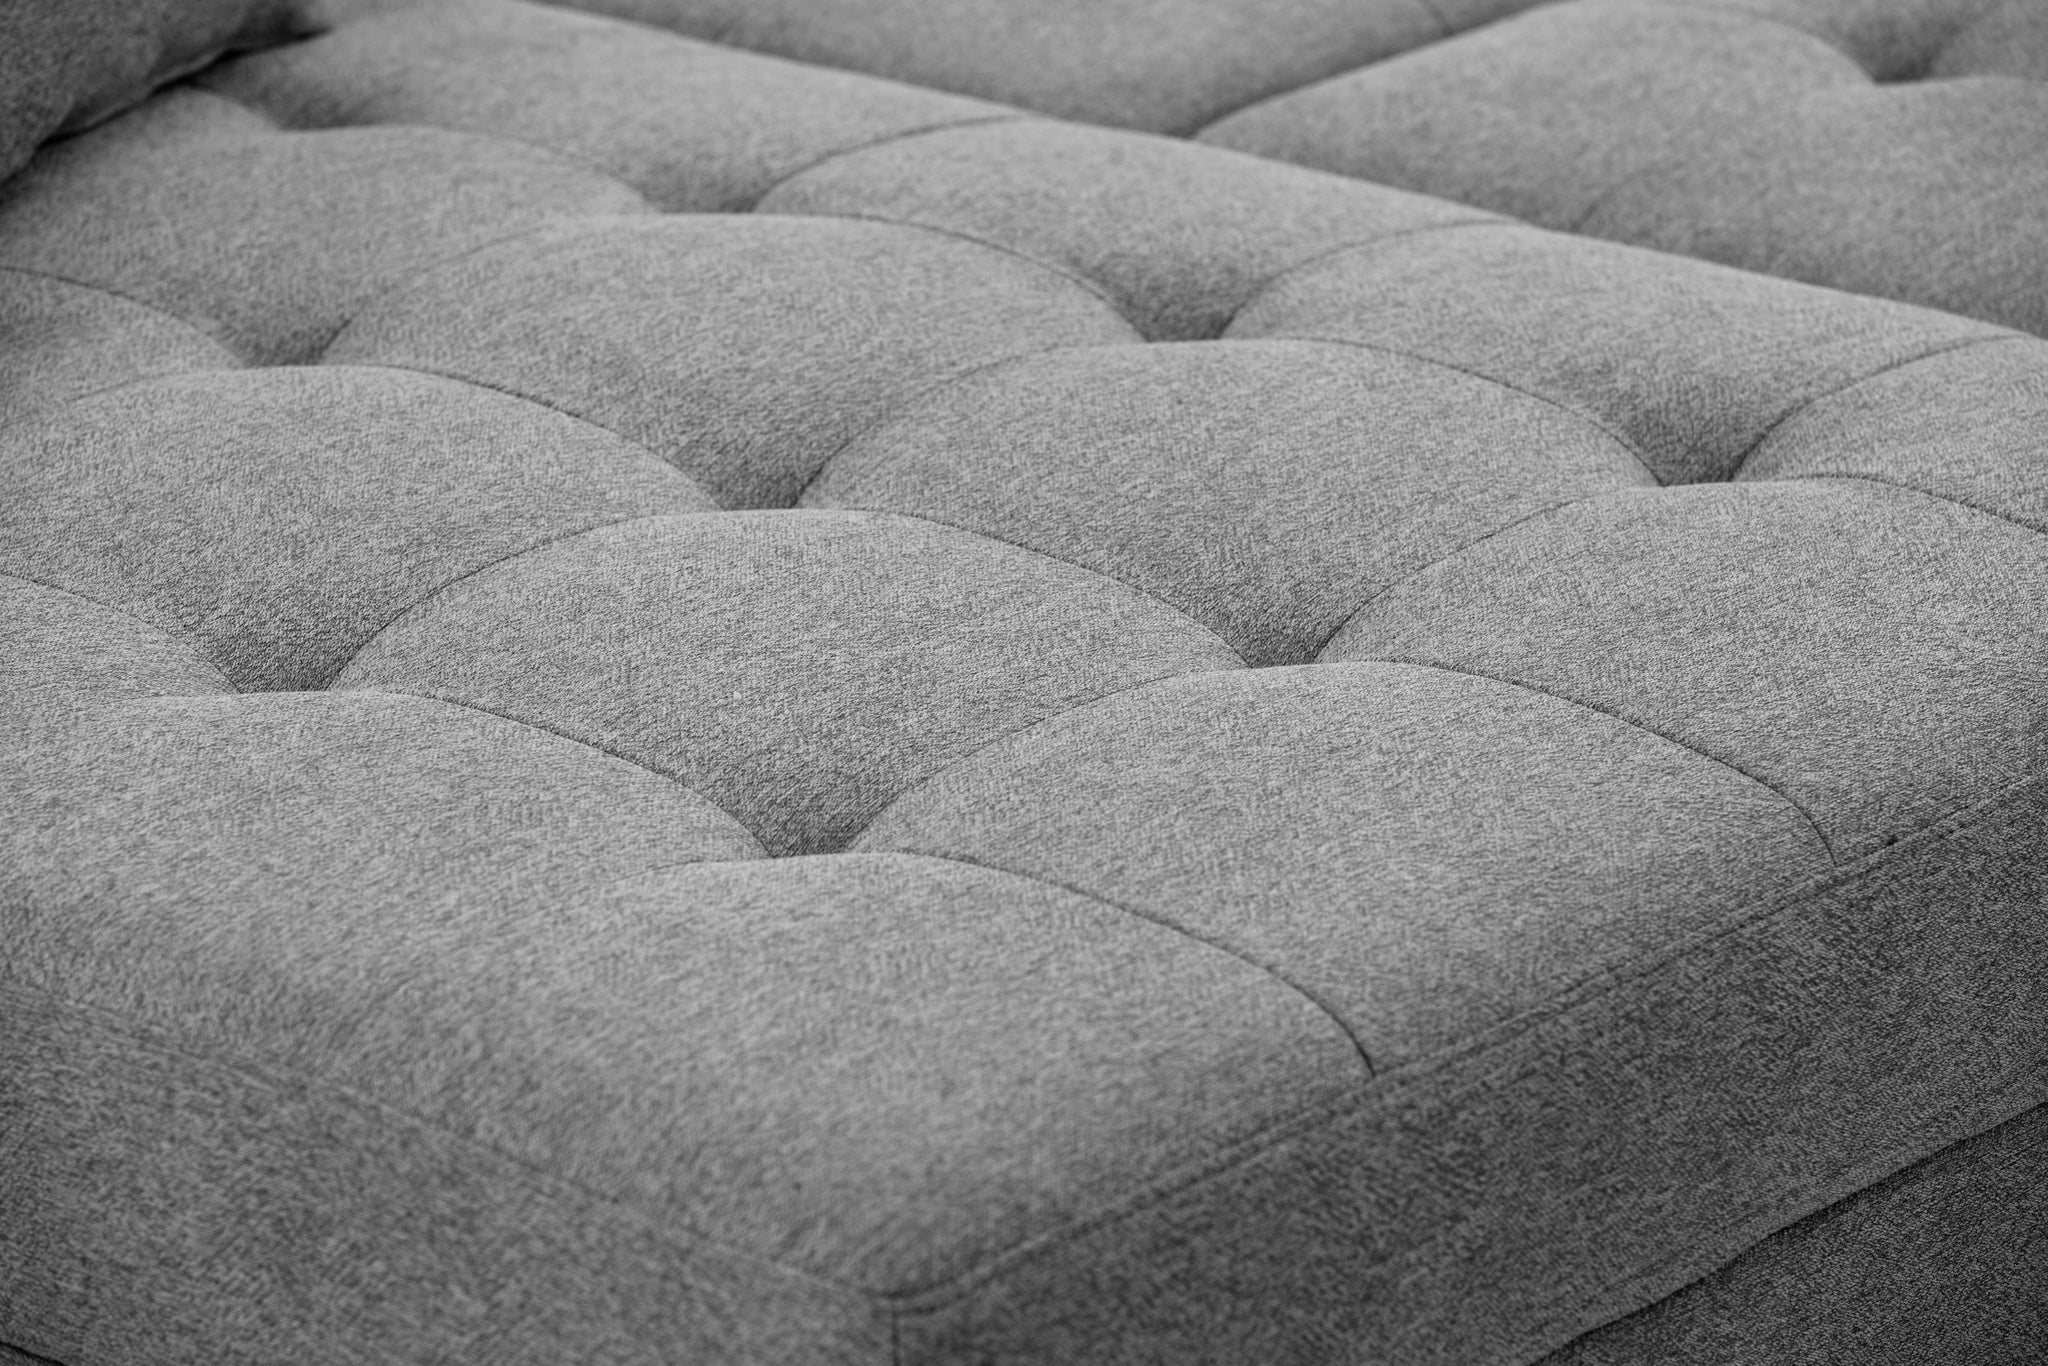 111'' Tufted Fabric 3 Seat L Shape Sectional Sofa dark grey-fabric